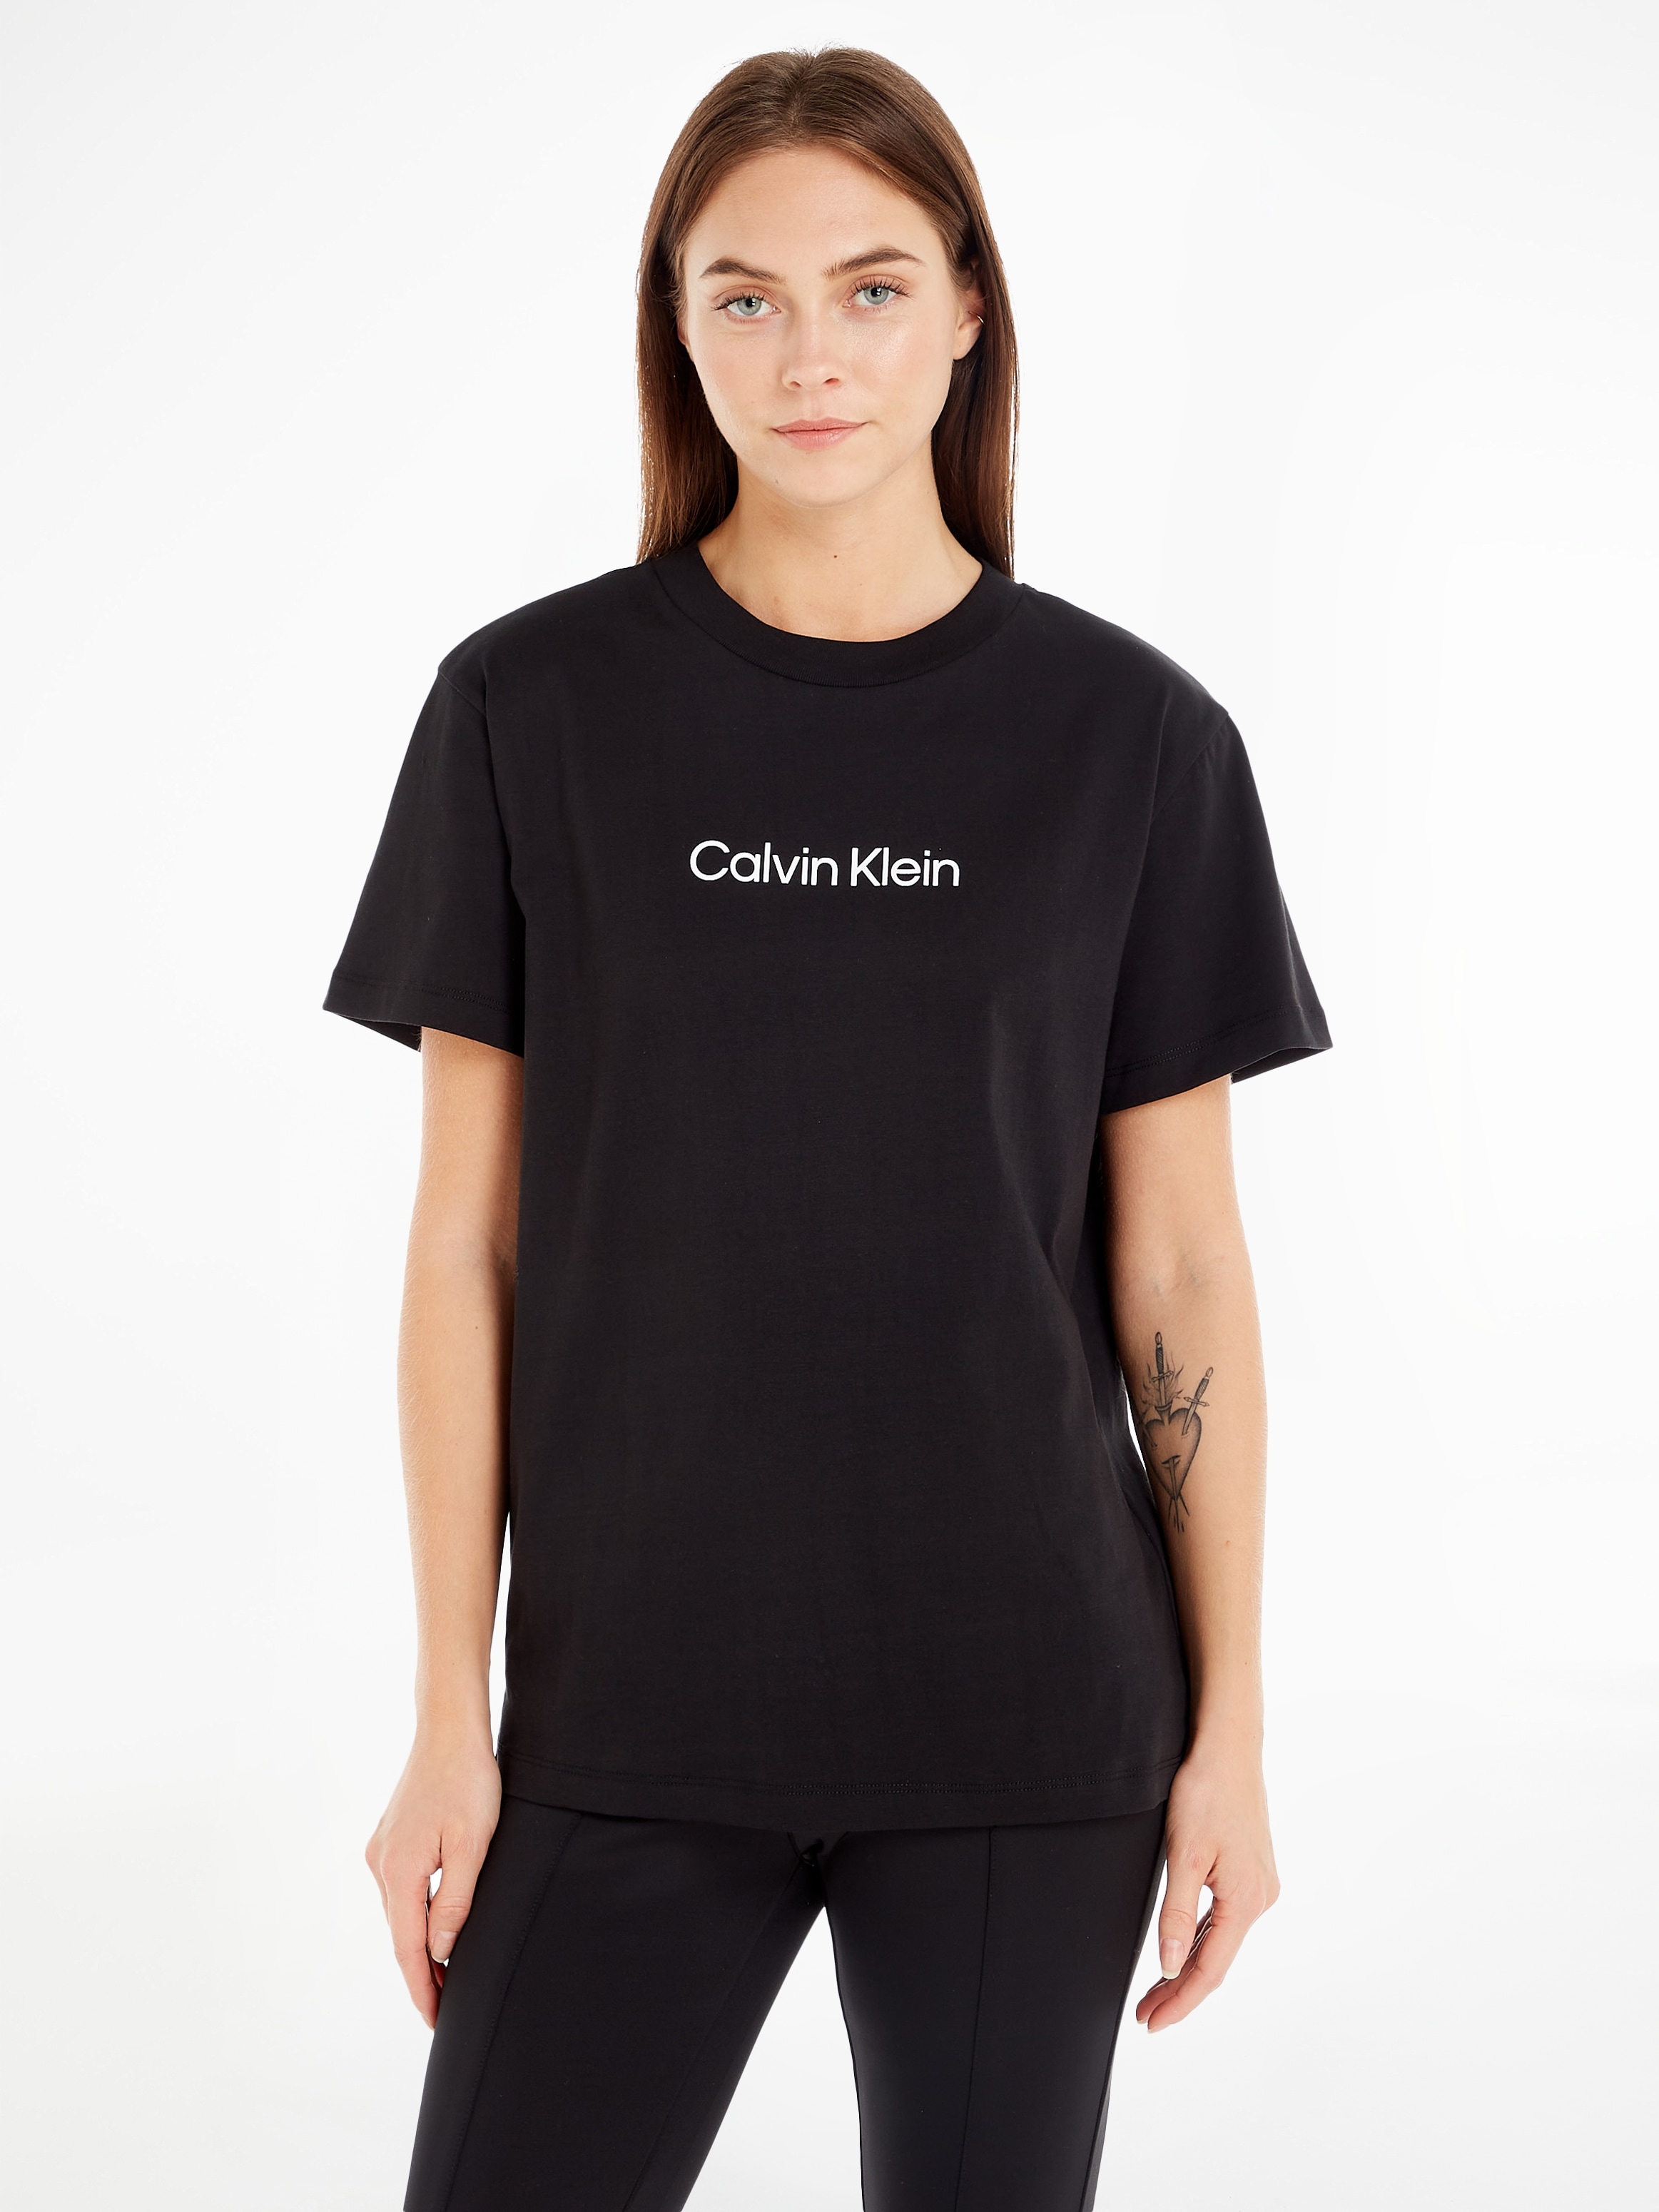 HERO Calvin »Shirt REGULAR« kaufen LOGO T-Shirt Klein